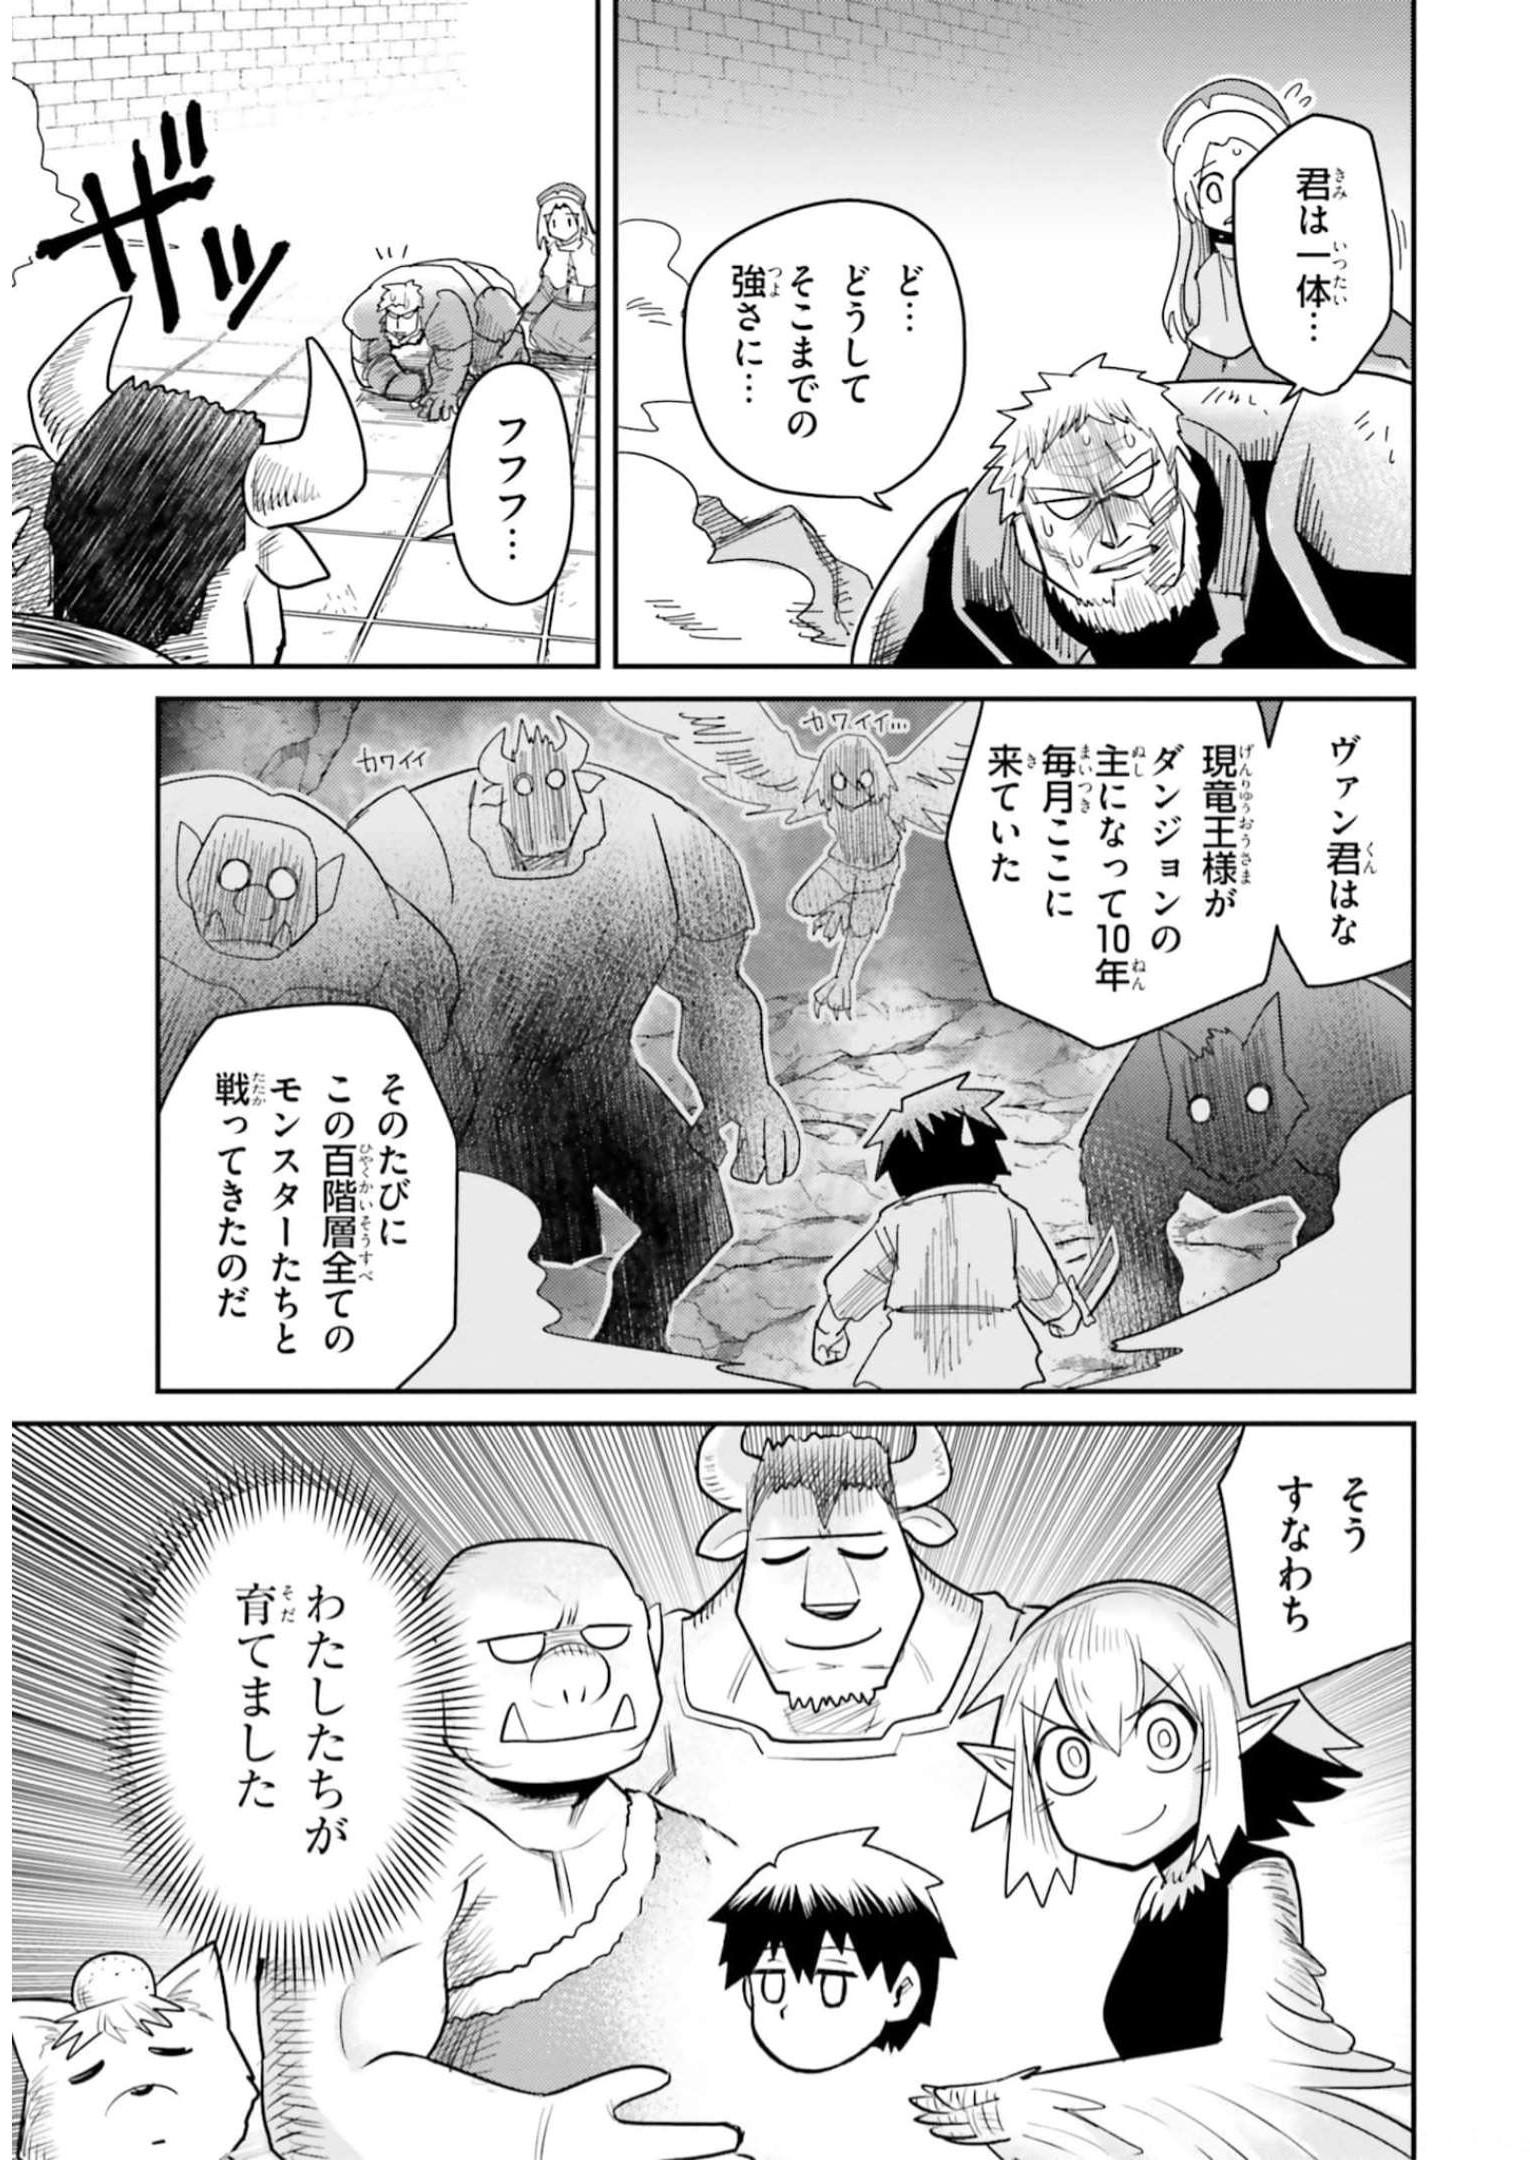 Dungeon no Osananajimi - Chapter 9 - Page 17